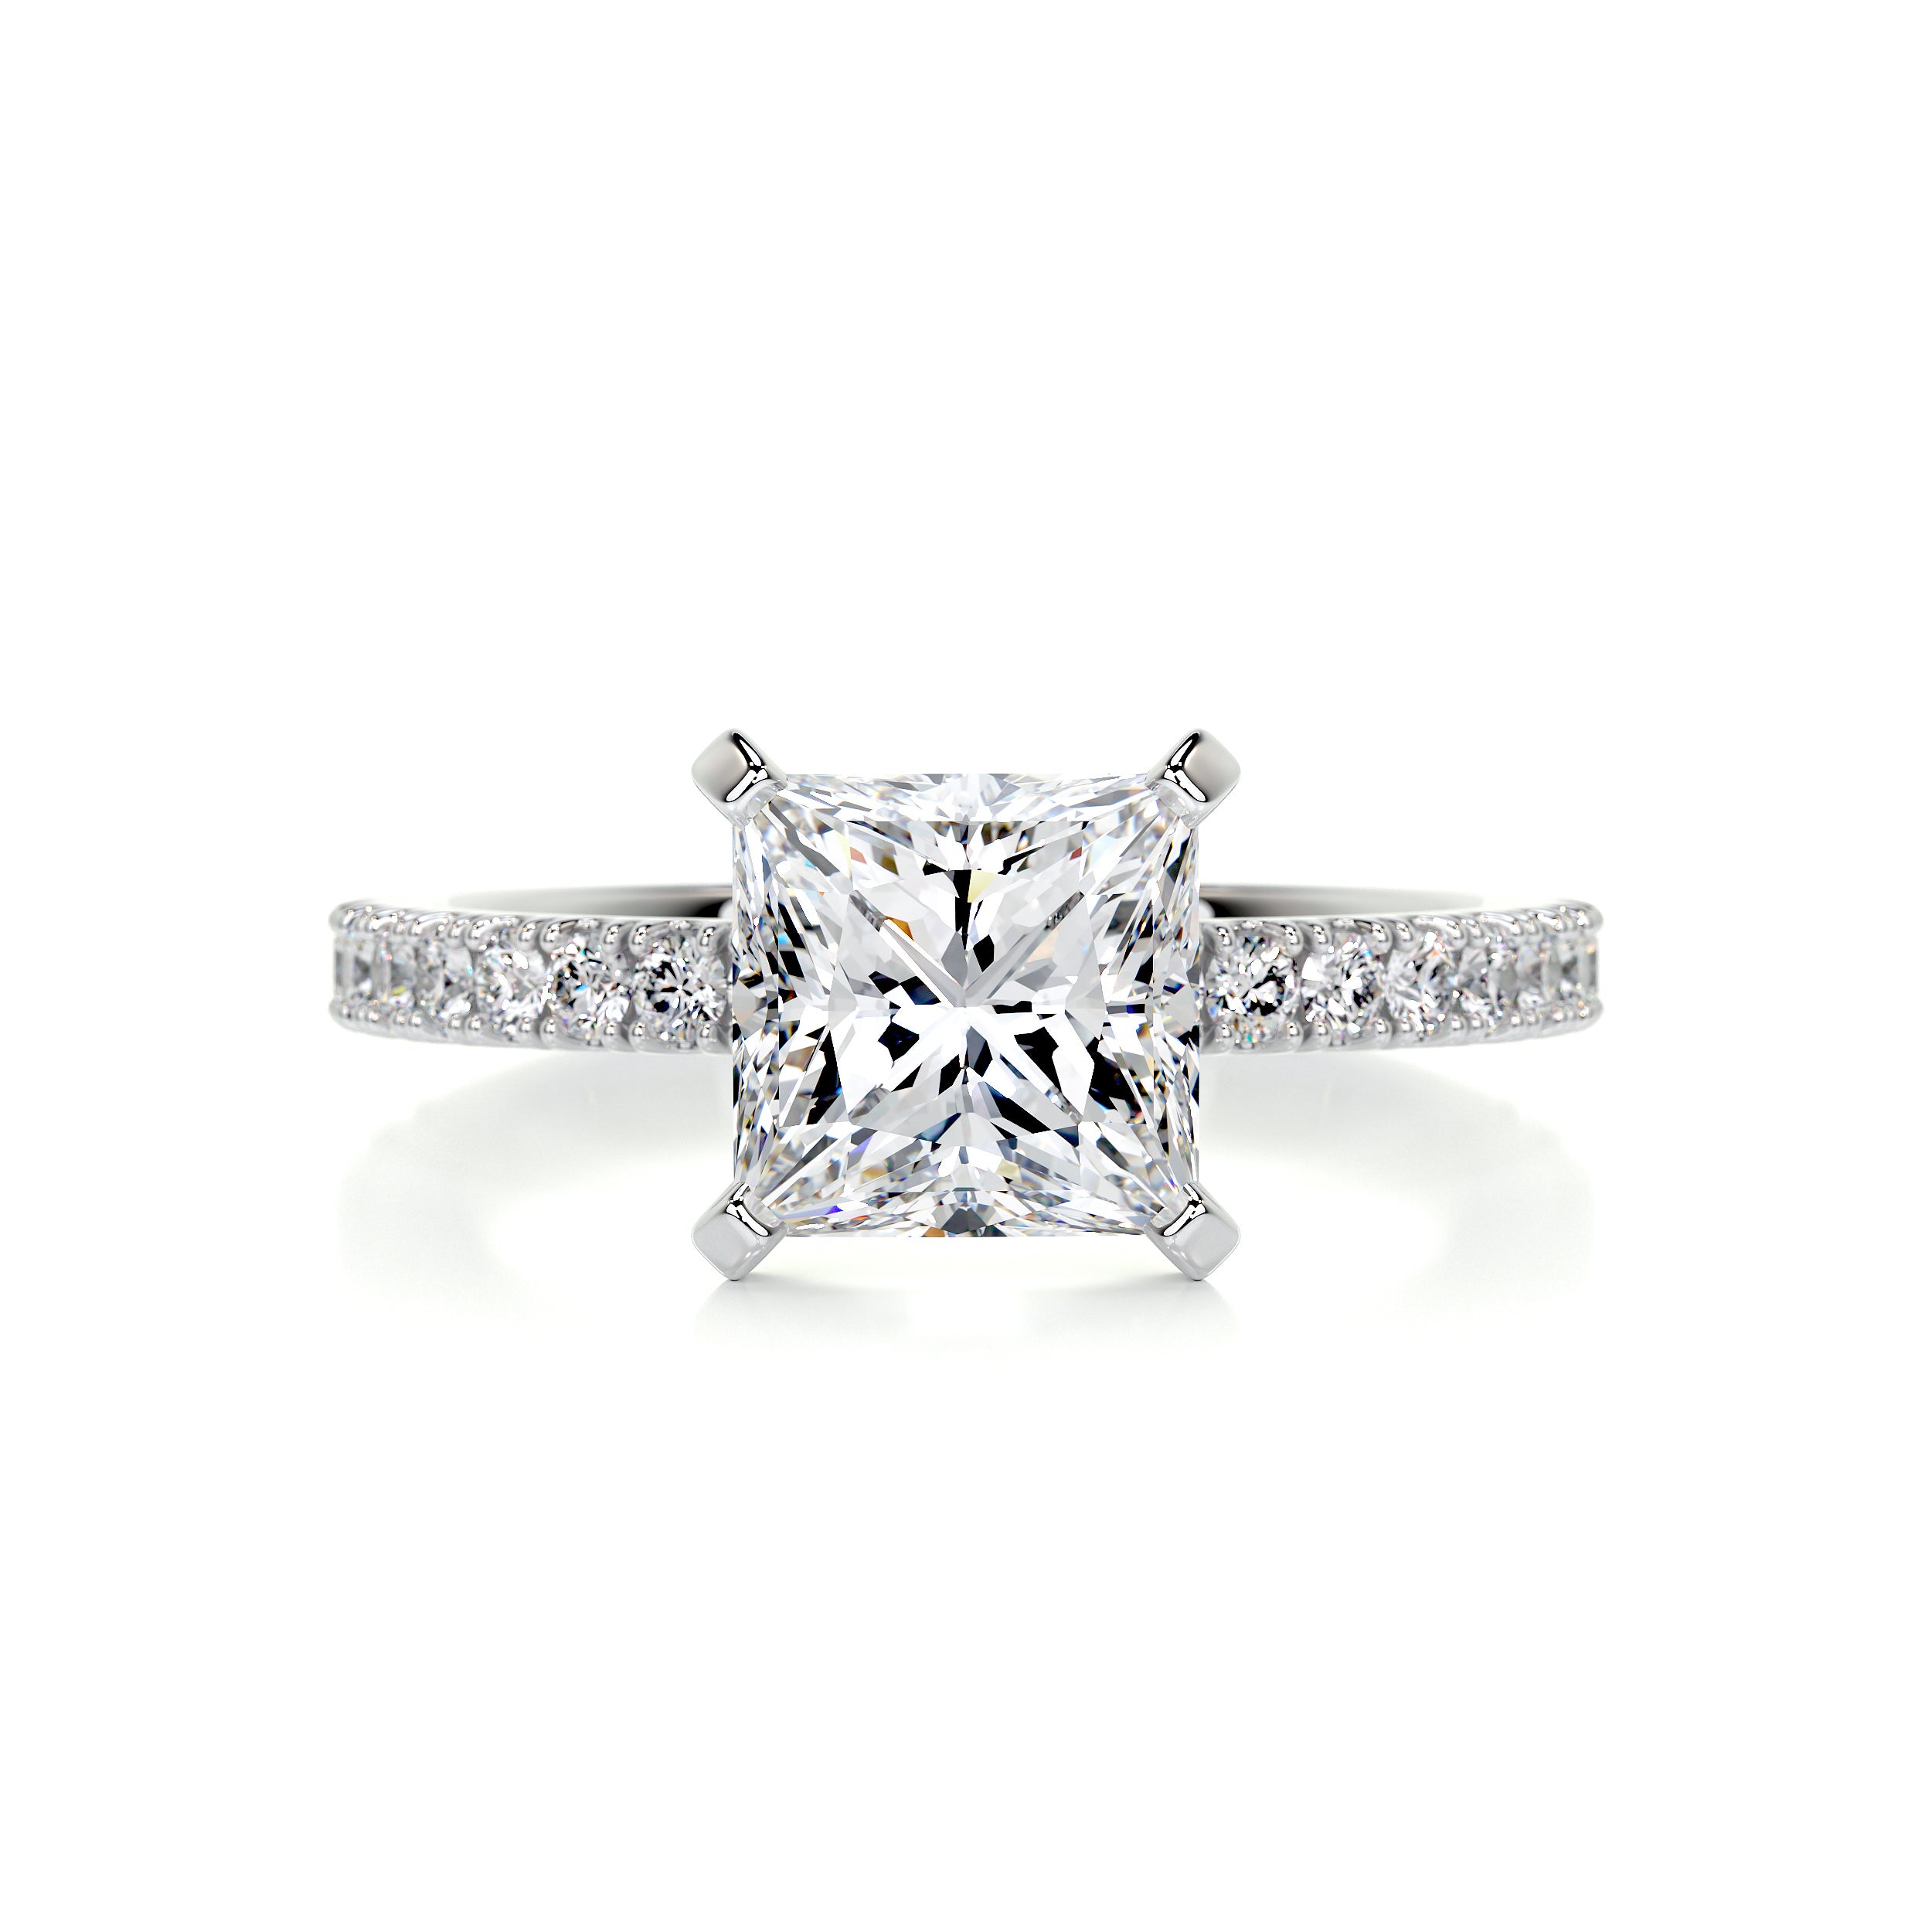 Stephanie Diamond Engagement Ring   (2.3 Carat) -18K White Gold